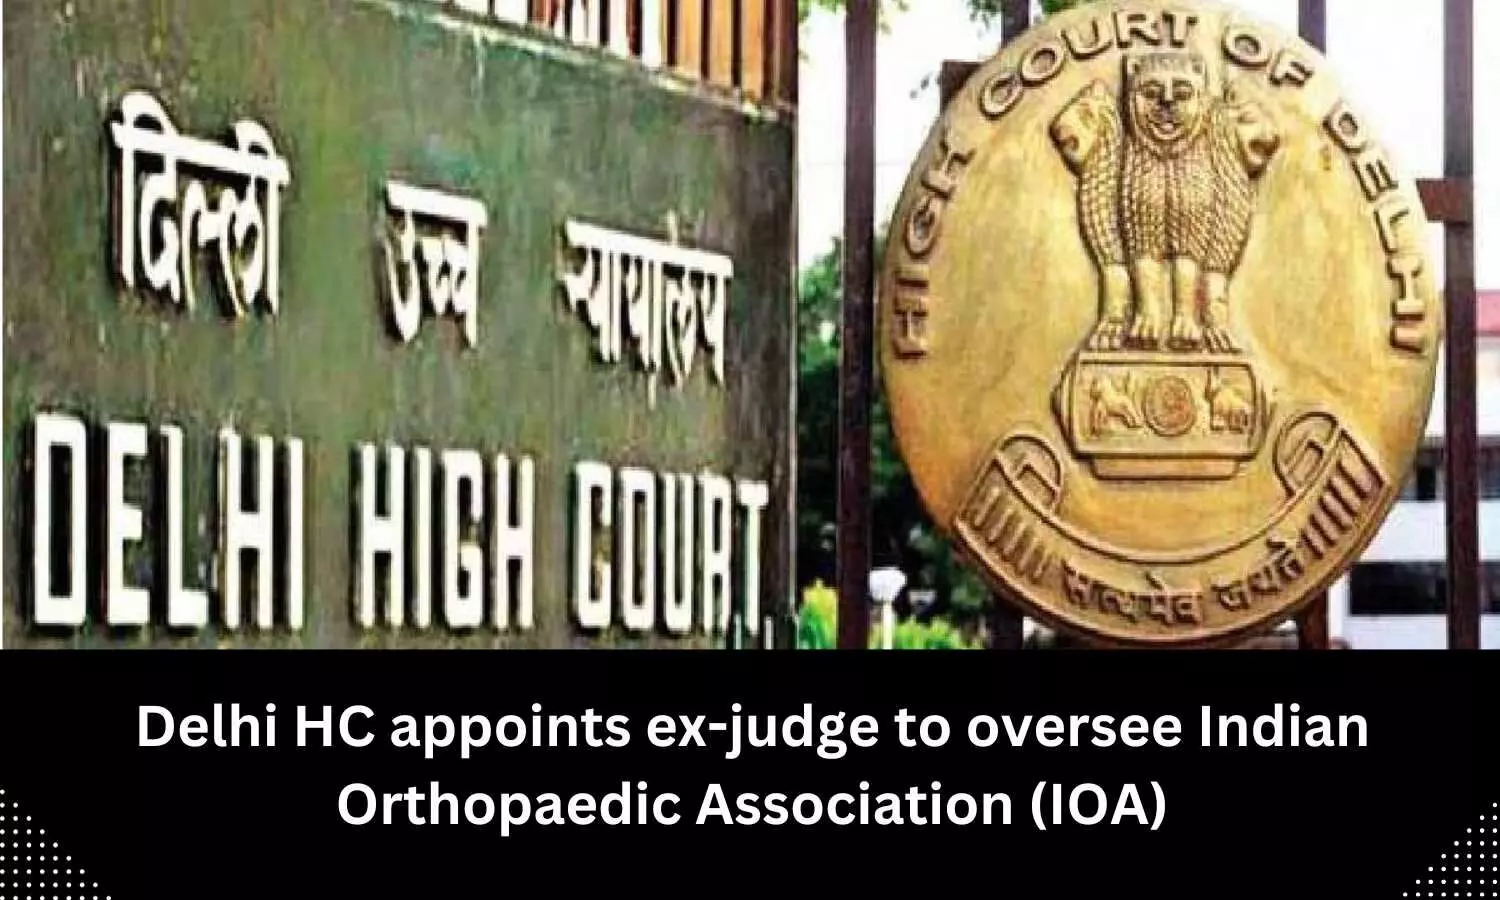 Delhi HC names former judge as administrator of Indian Orthopaedic Association